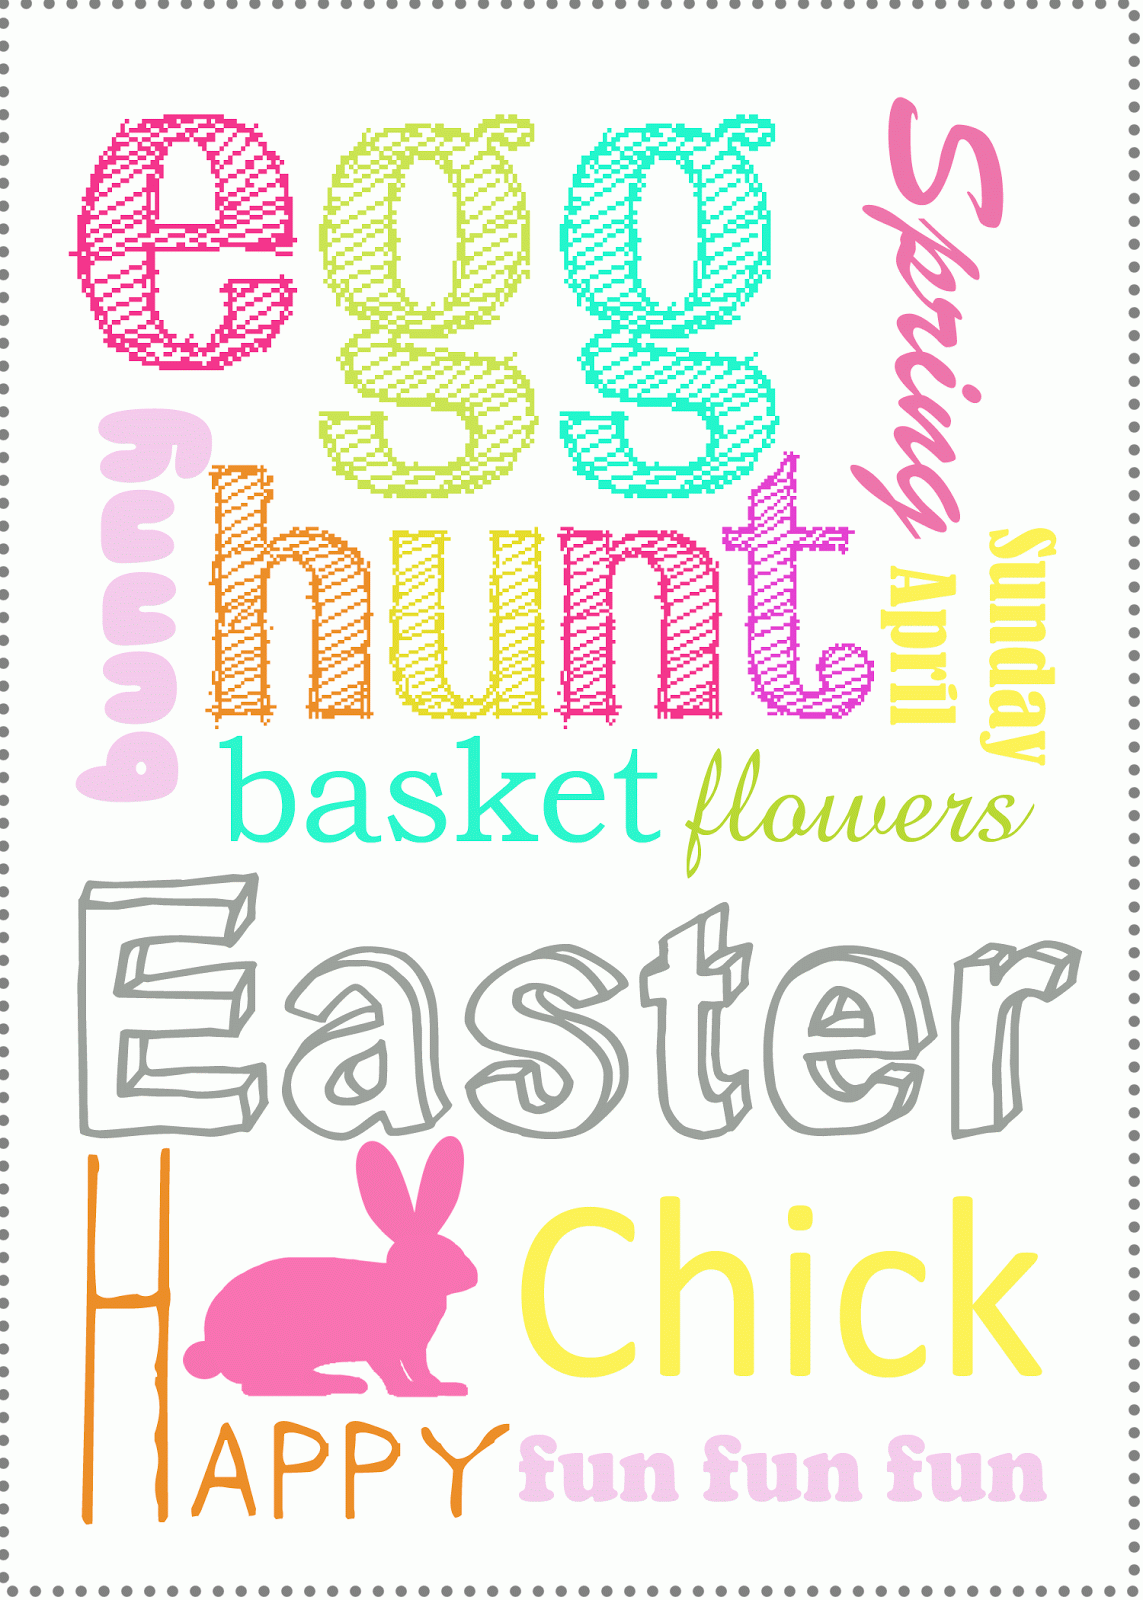 Easter Egg Hunt Invitations Free Printable